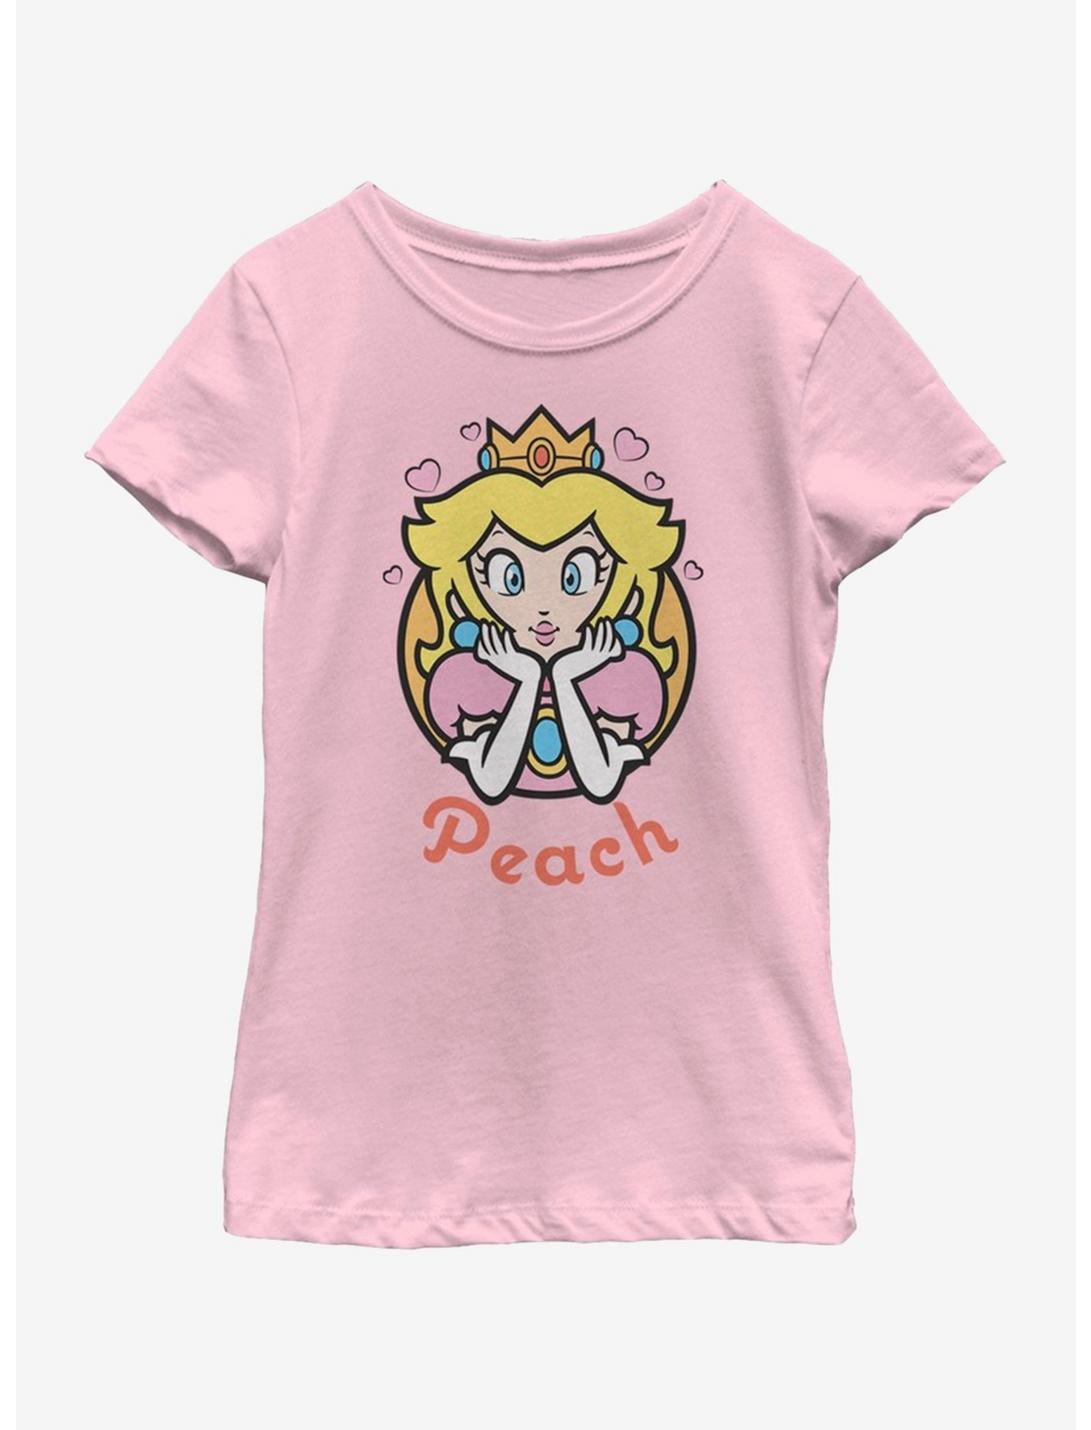 Nintendo Super Mario Peach Hearts 77 Youth Girls T-Shirt, PINK, hi-res